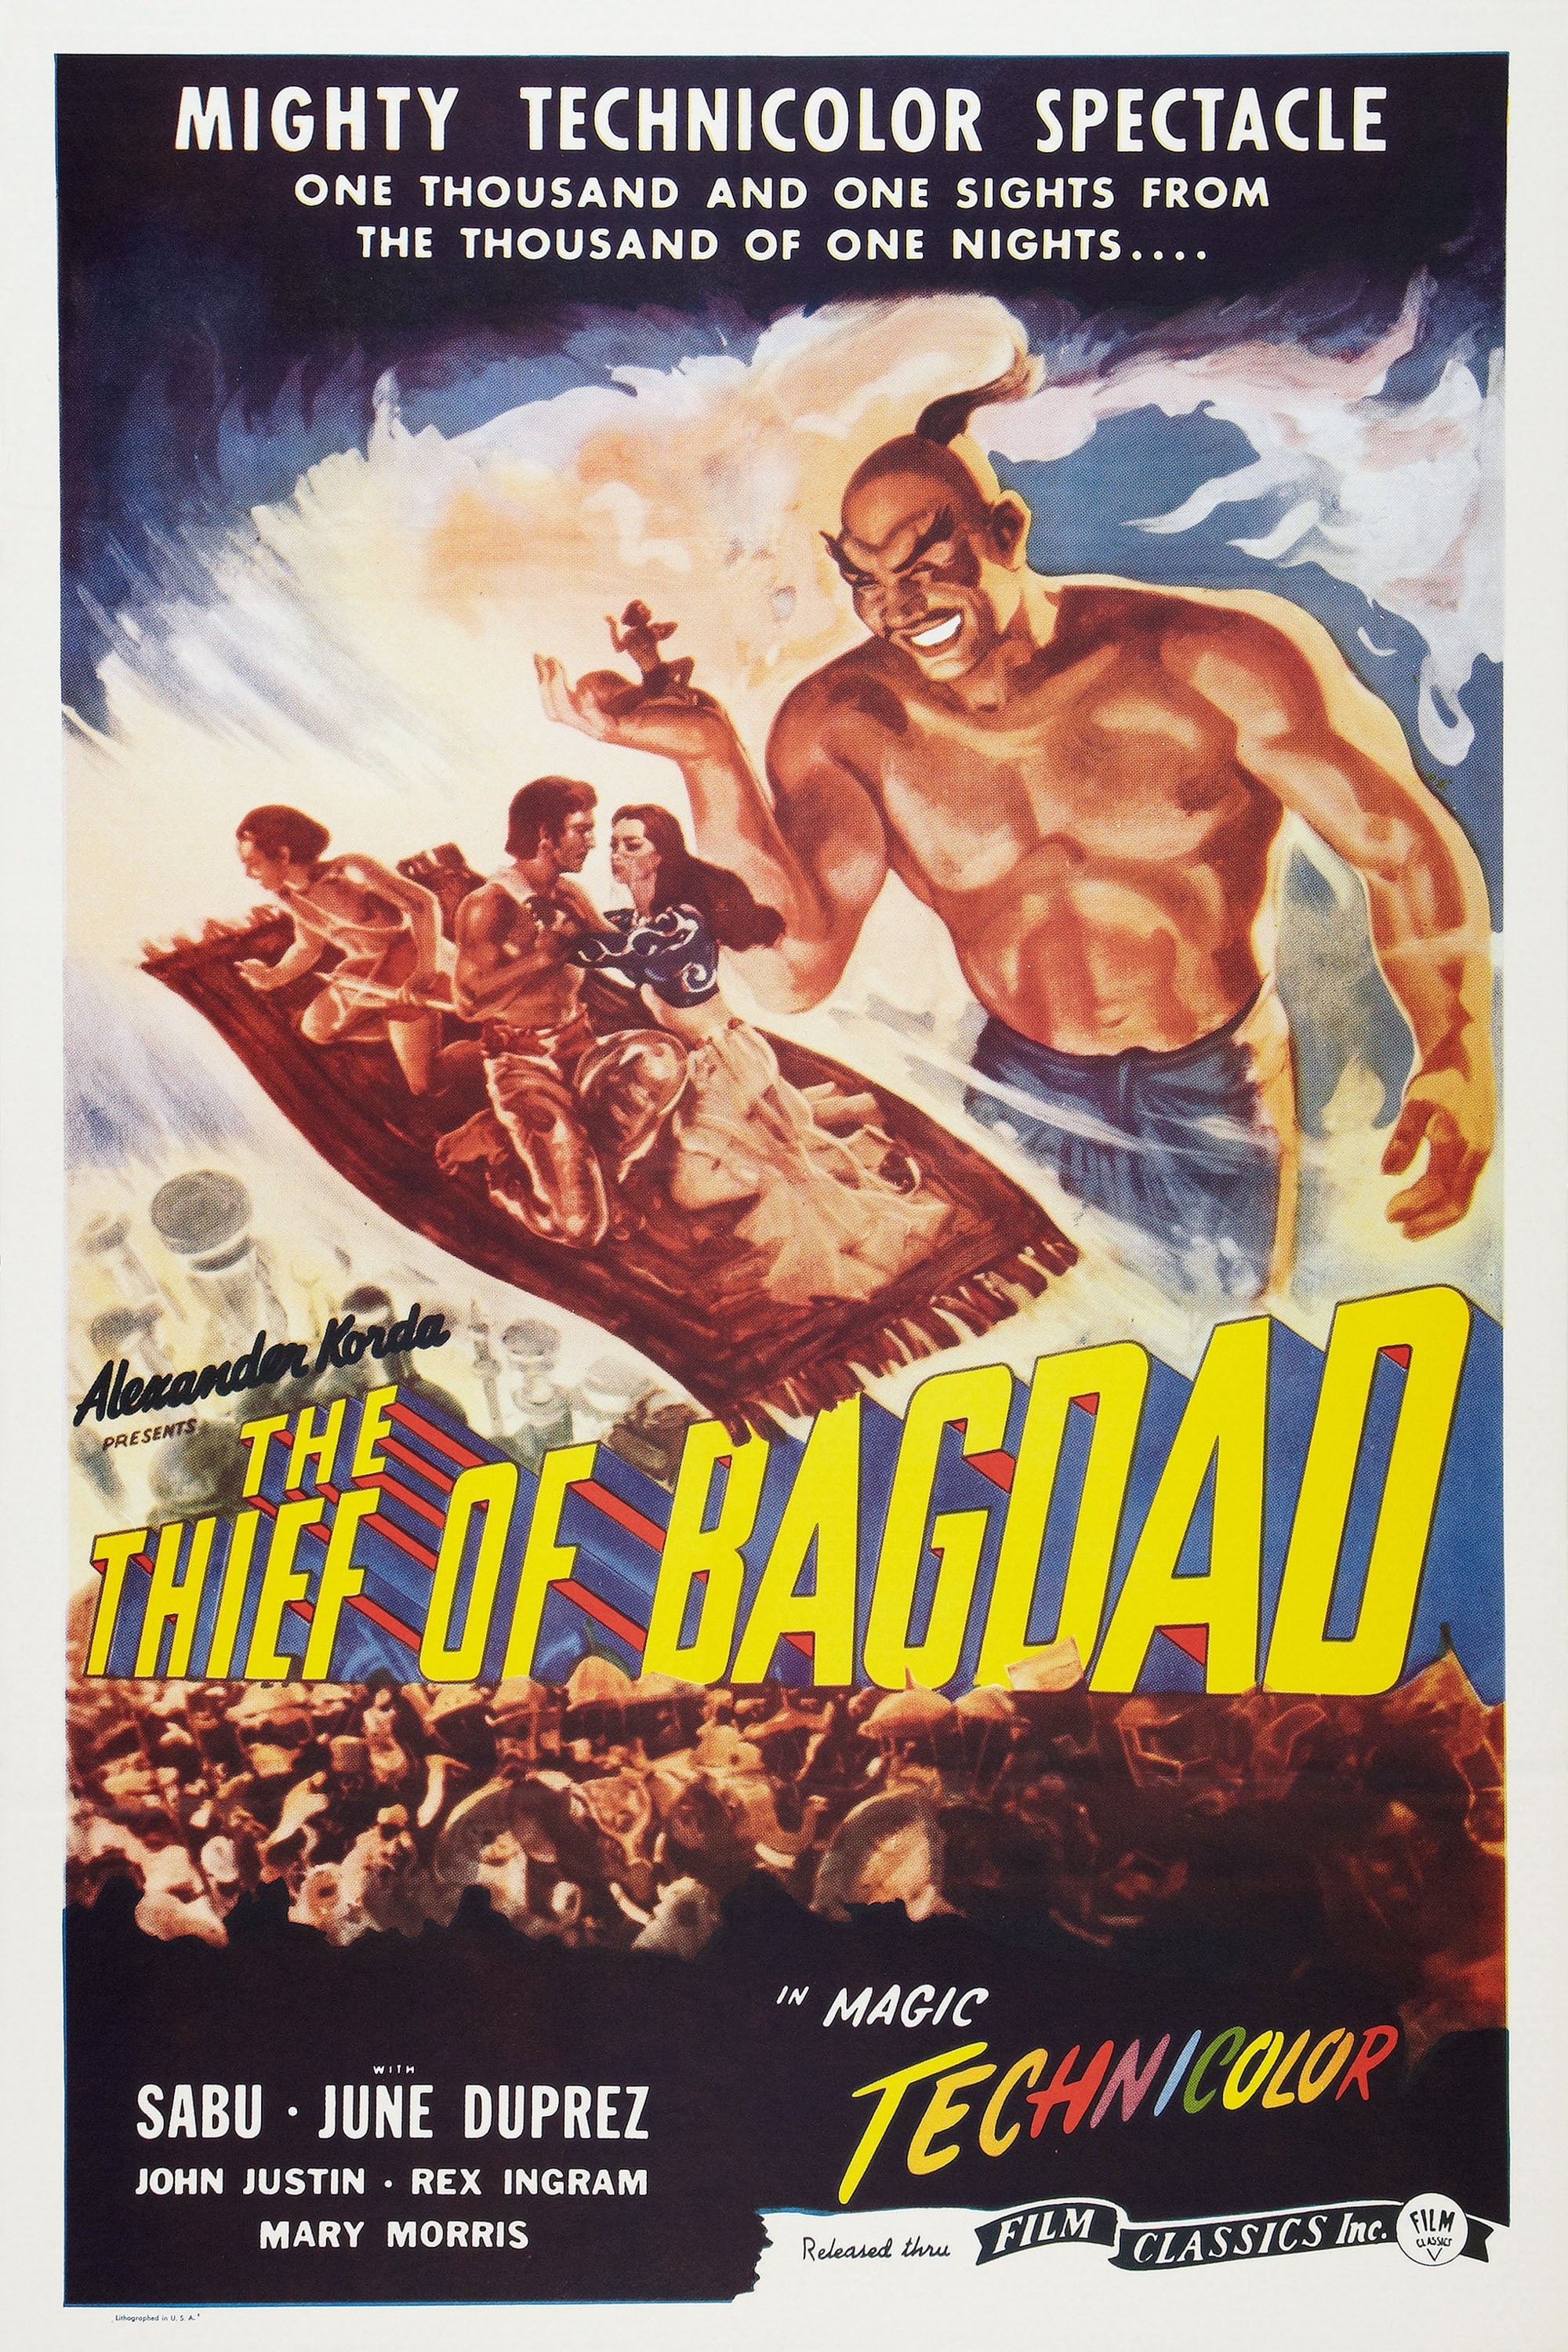 The Thief of Bagdad - The Thief of Bagdad